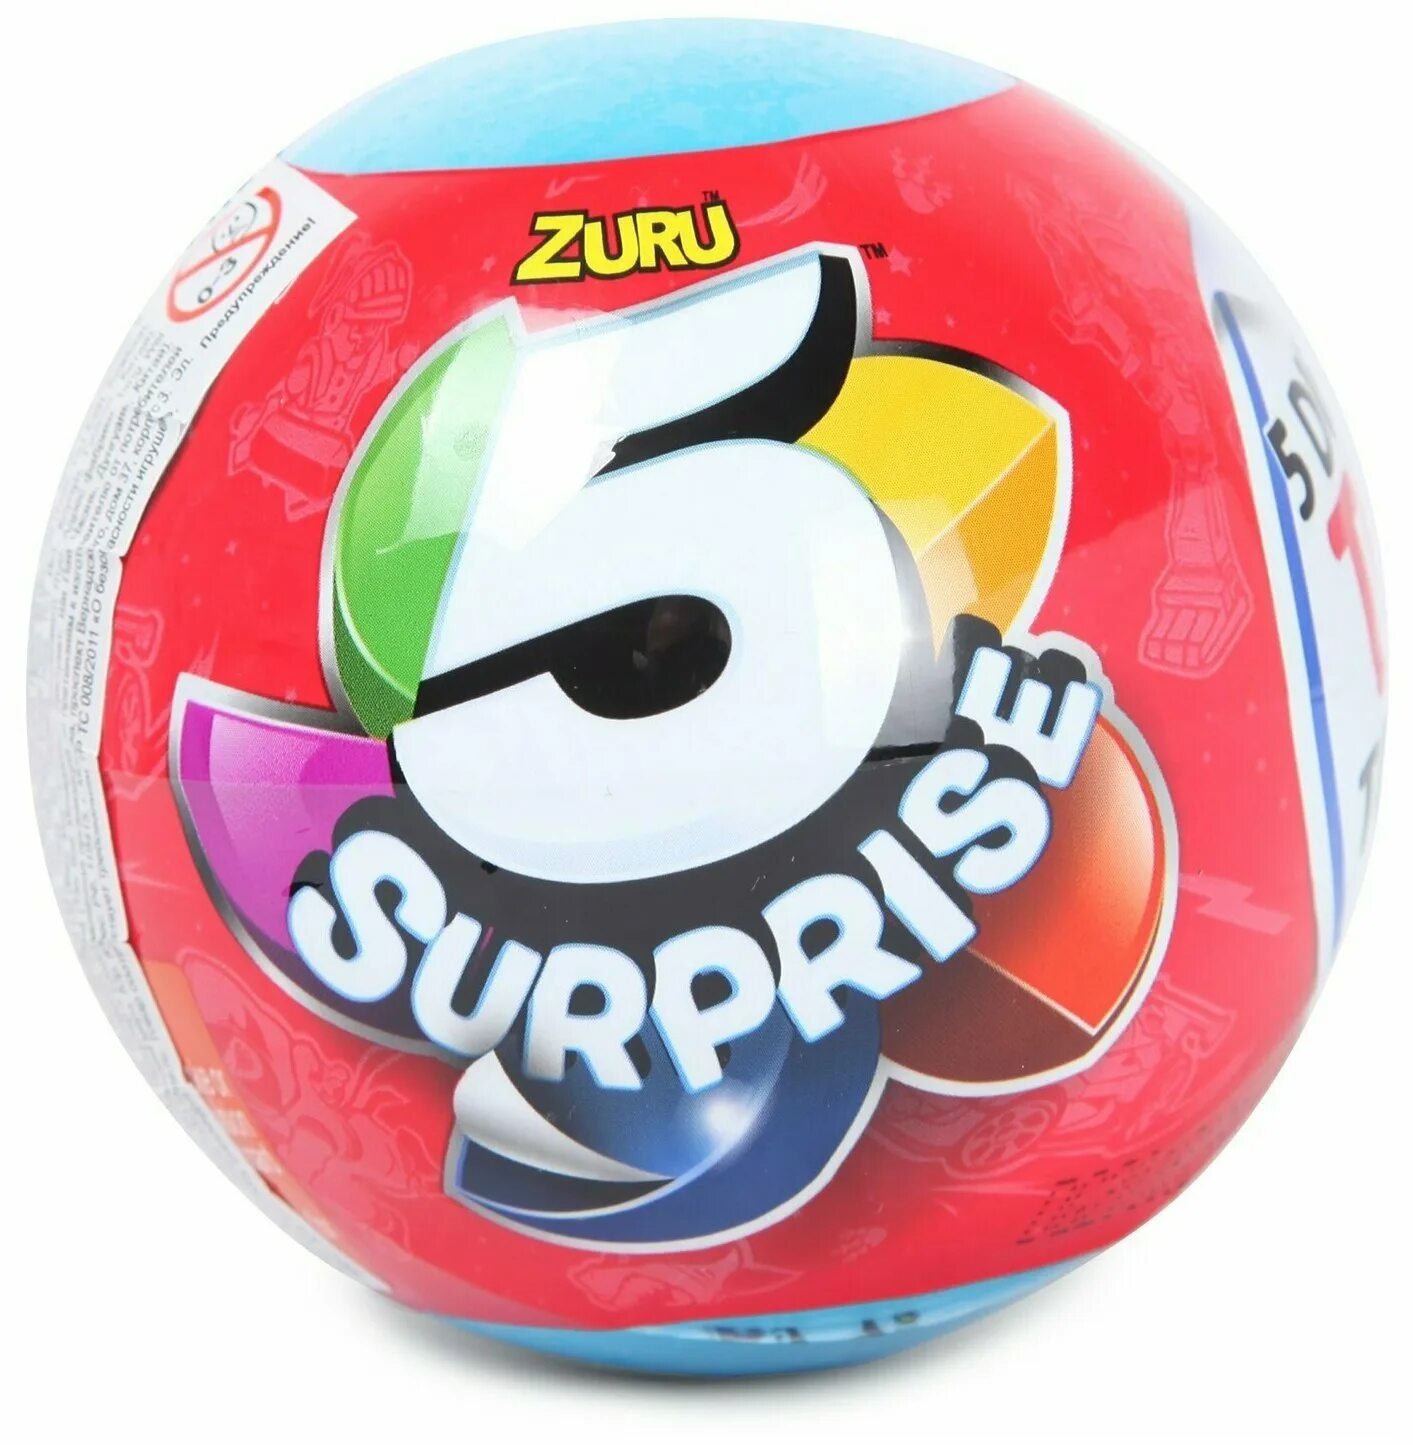 Сюрприз озон. Шар Zuru 5 сюрпризов. 5 Сюрпризов в шаре мини игрушки.